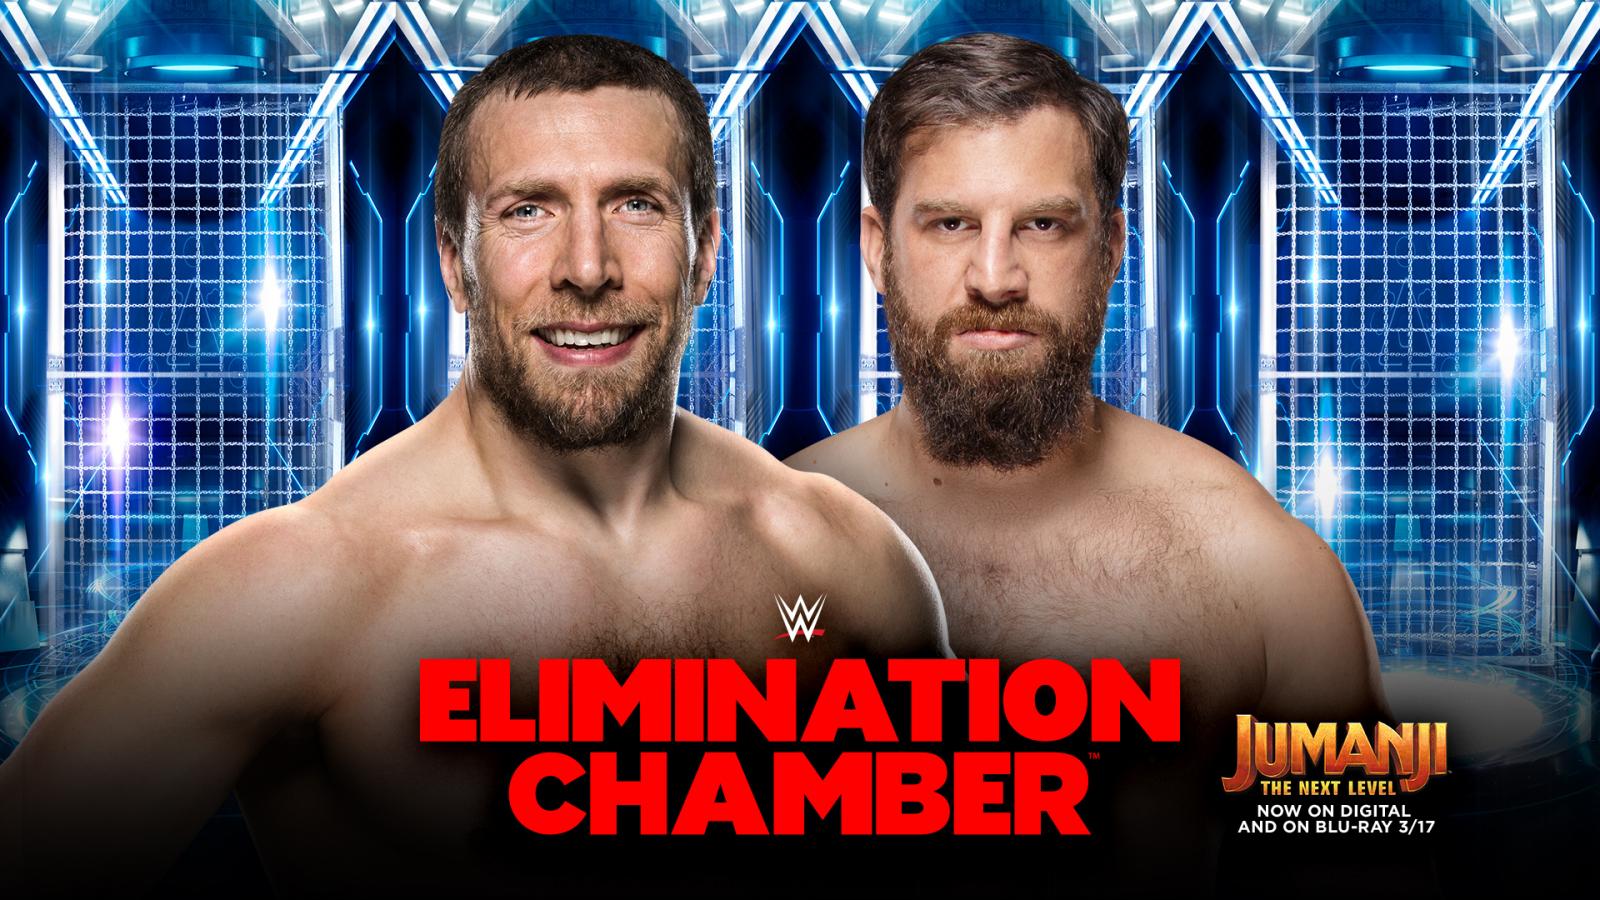 Daniel Bryan vs Drew Gulak - WWE Elimination Chamber 2020